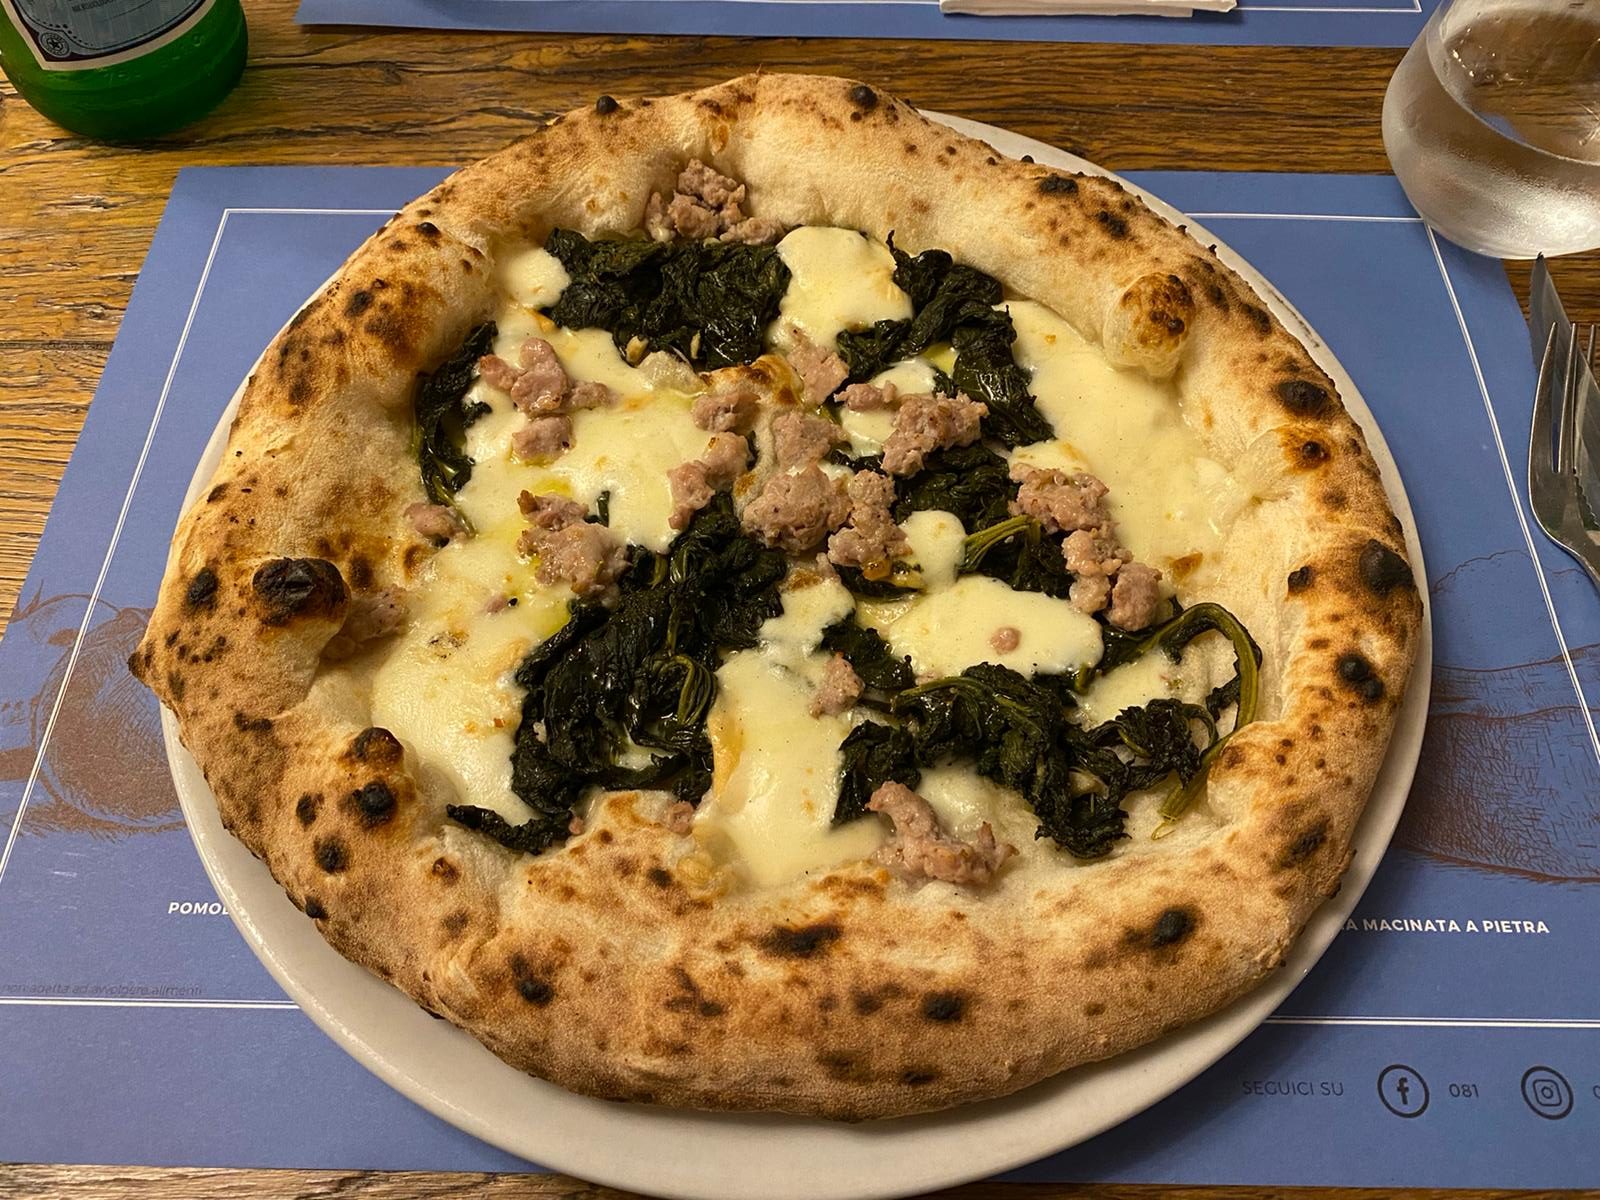 Pizza salsiccia e friarielli (Pizzeria 081, Melegnano)